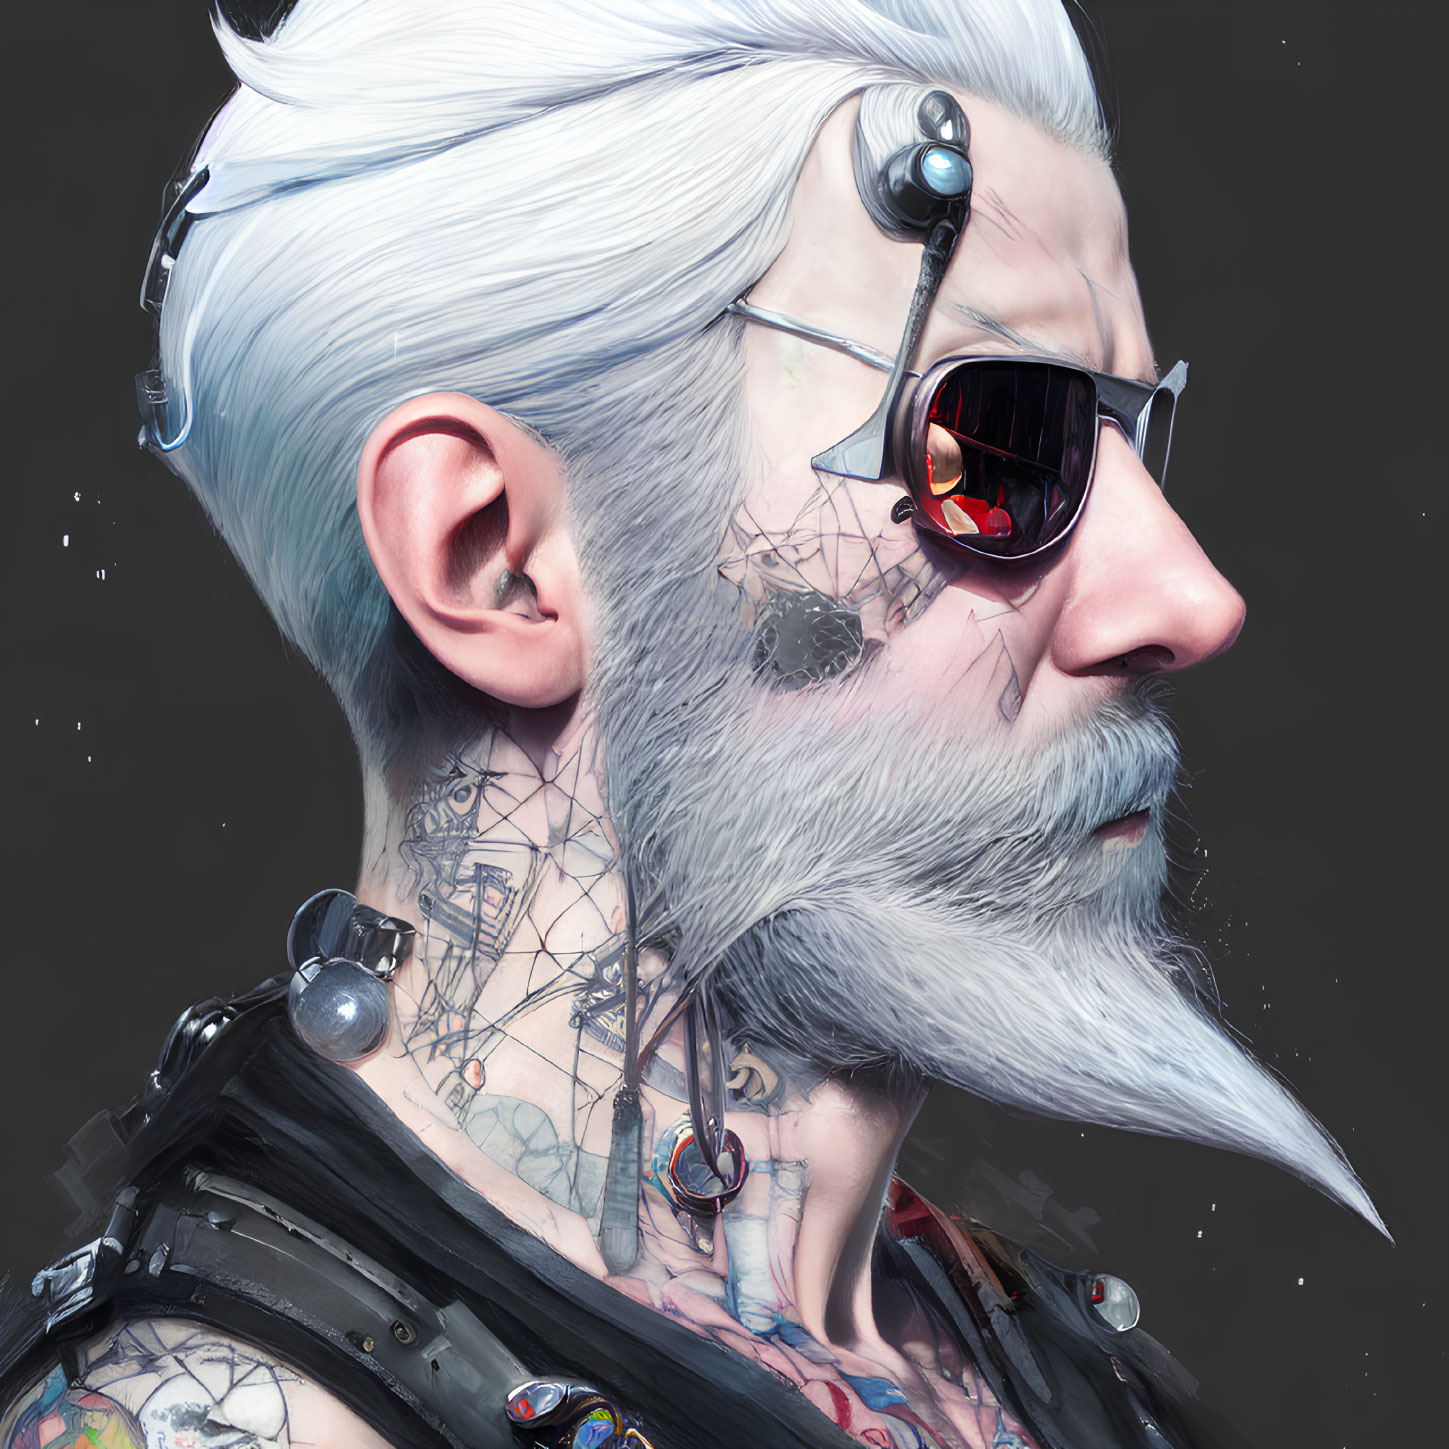 Man with White Hair, Tattoos, Cybernetics & Sunglasses